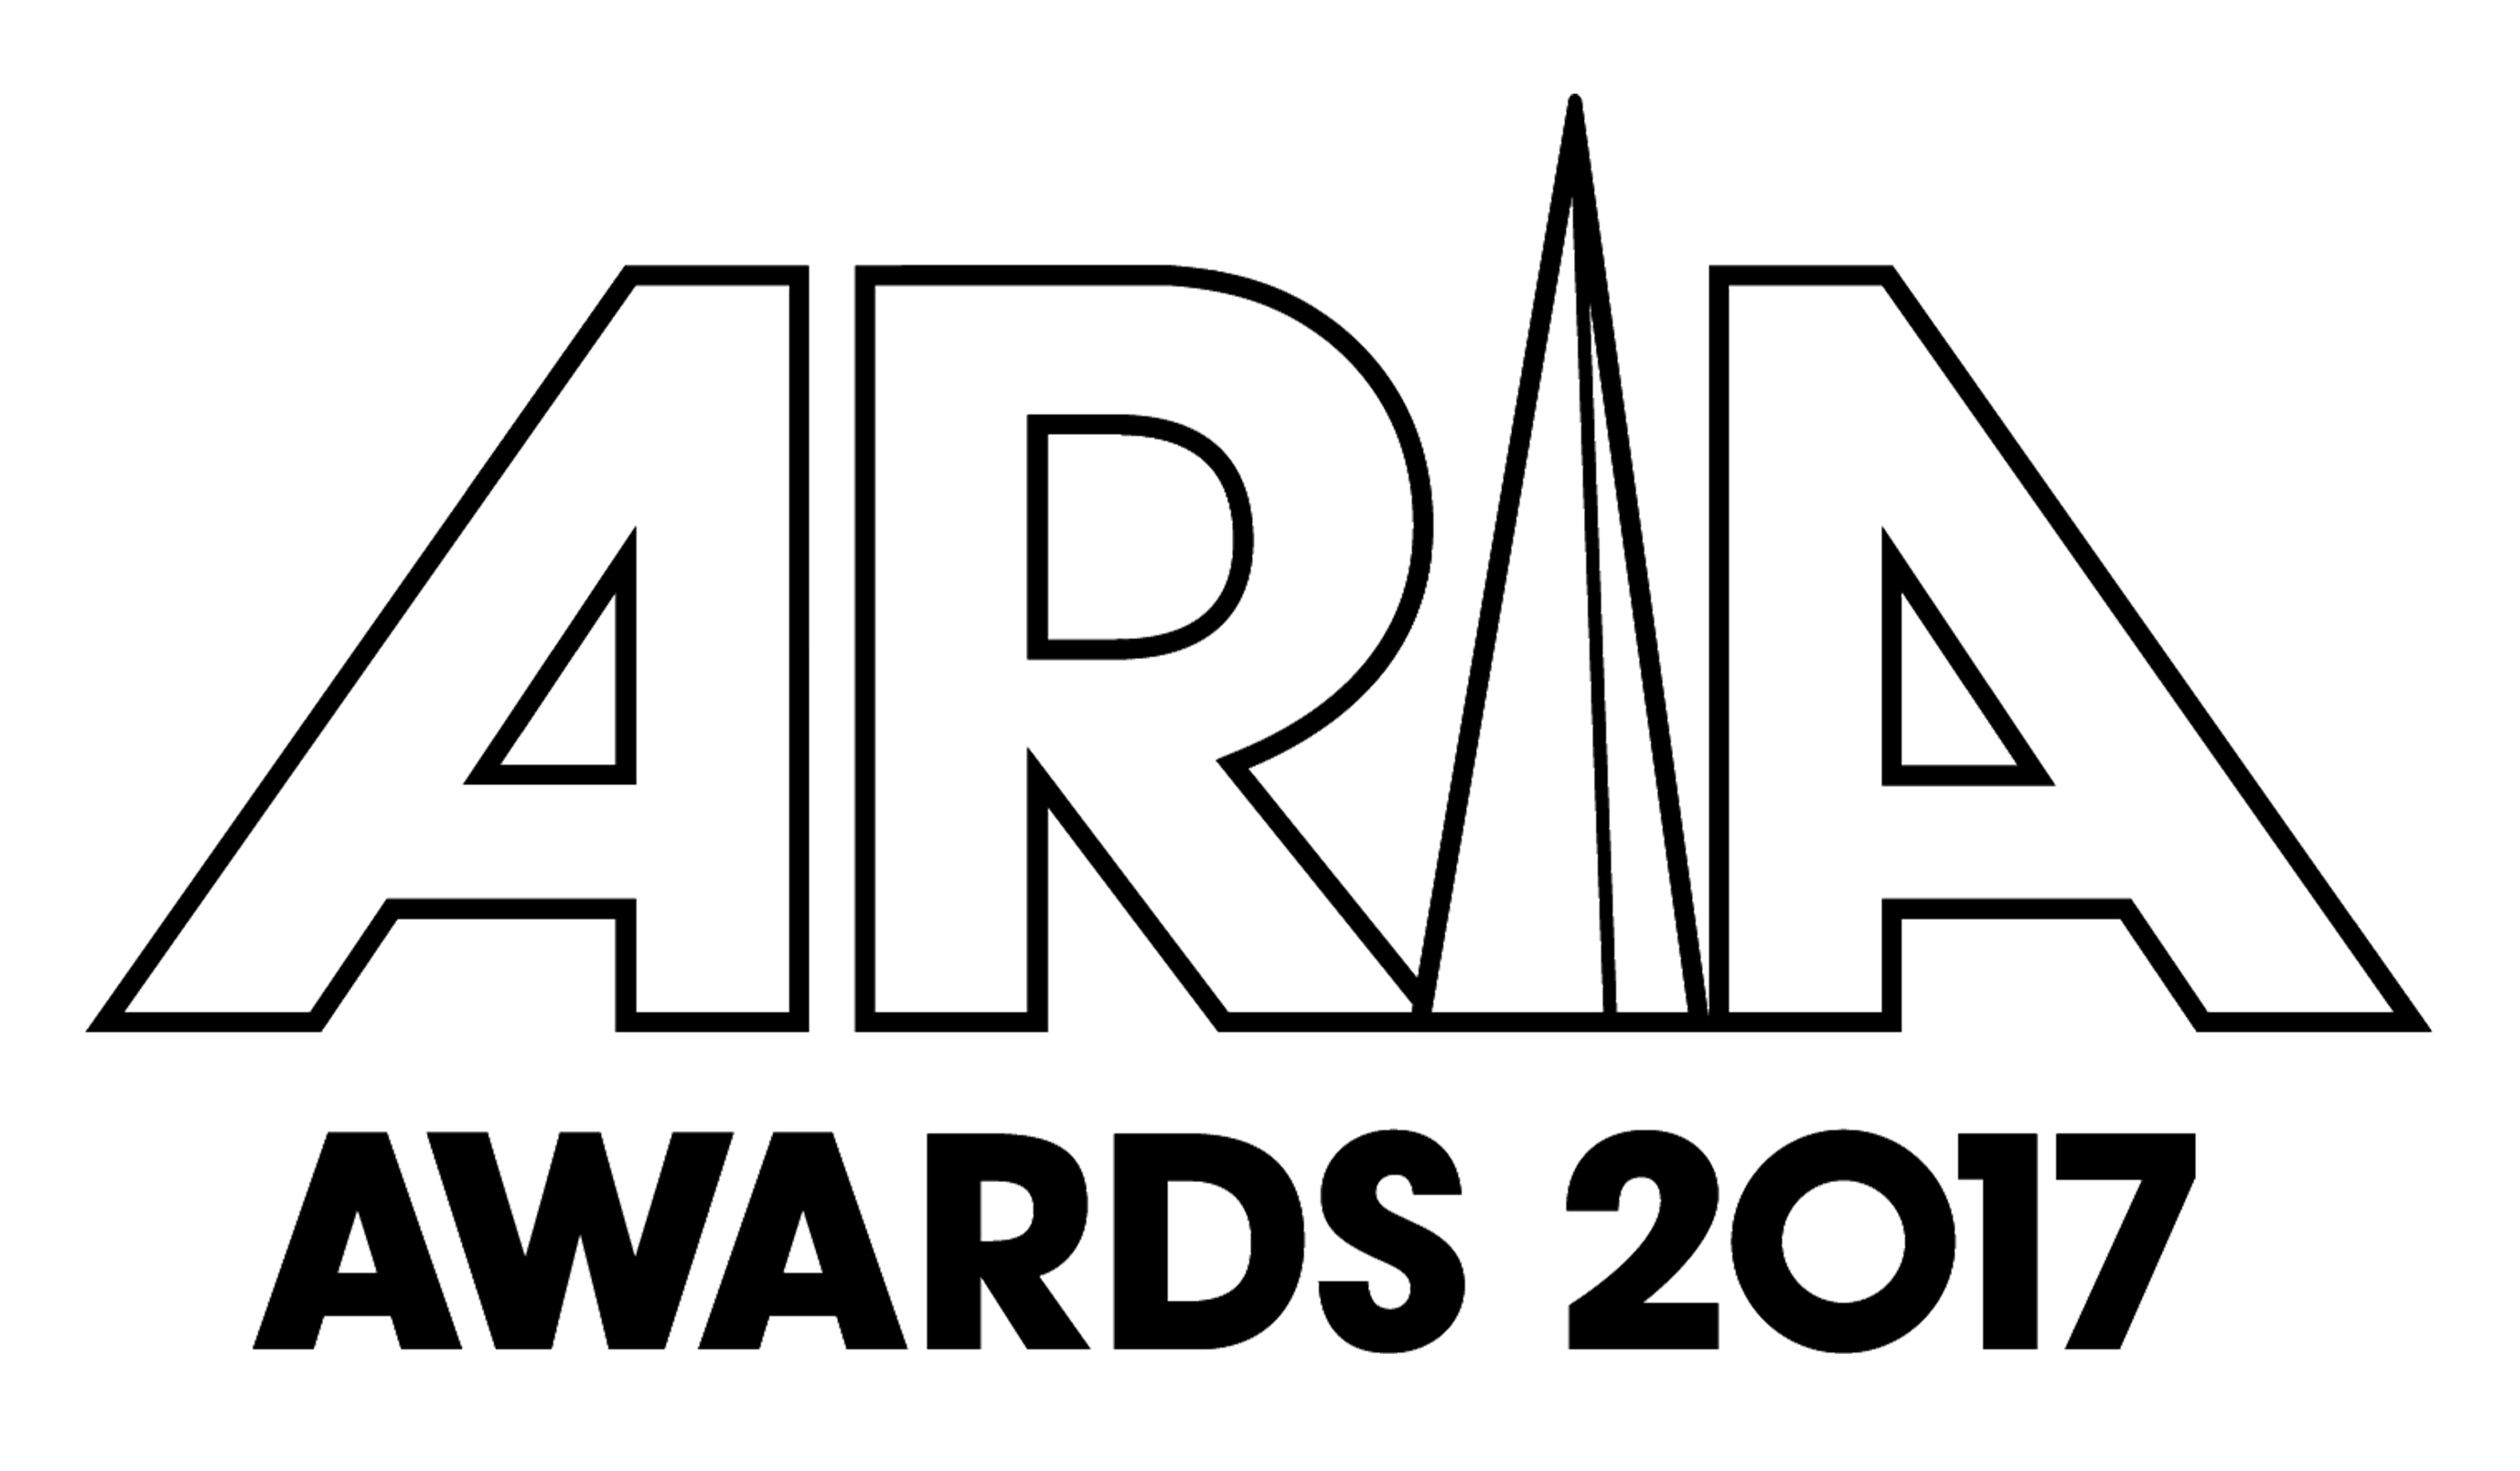 ARIA Awards telecast return to Nine Network (again)